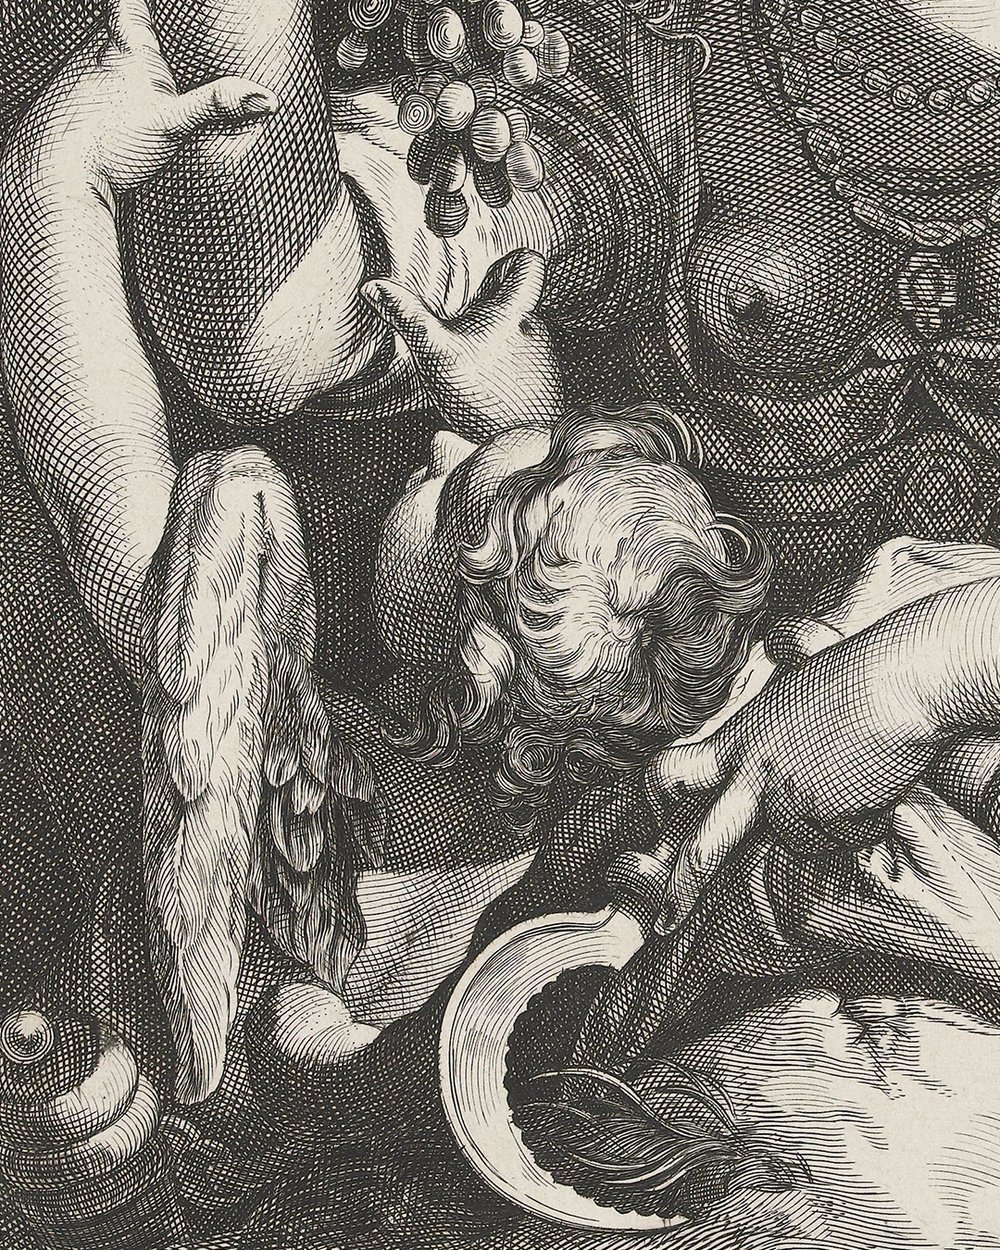 ''Bacchus'' (1862)